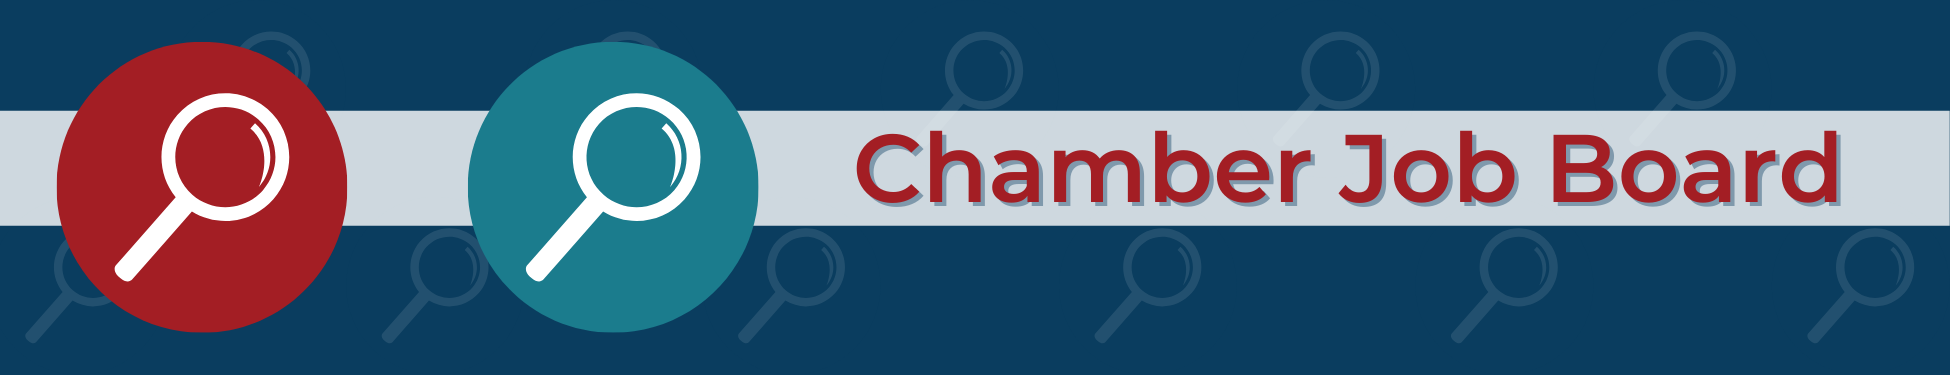 Copy of Chamber Job Board Webpage Header